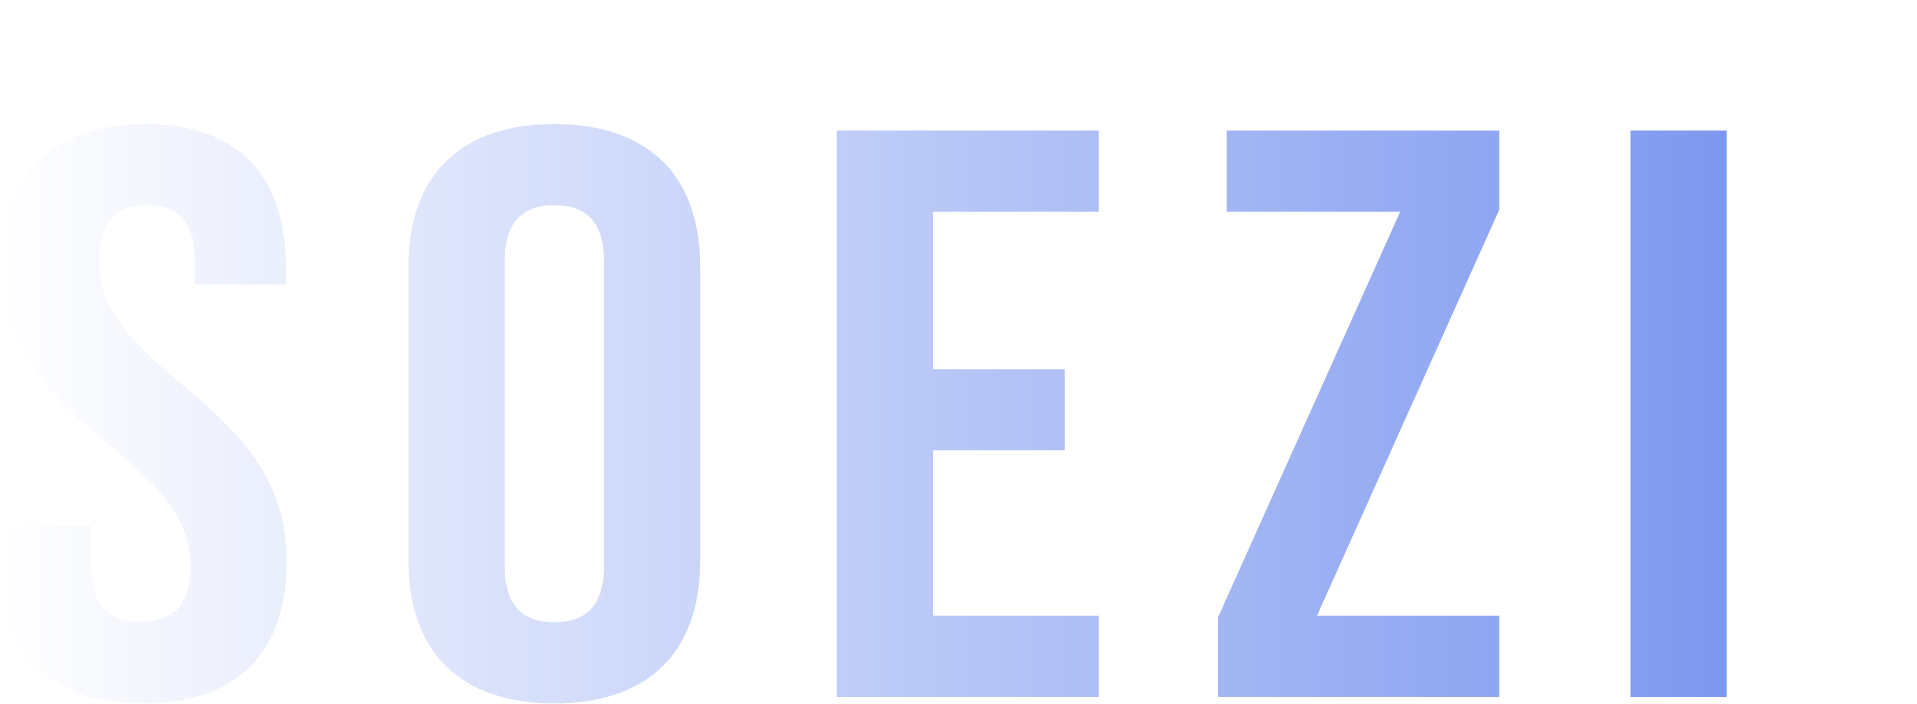 soezi-logo-gradient-trans